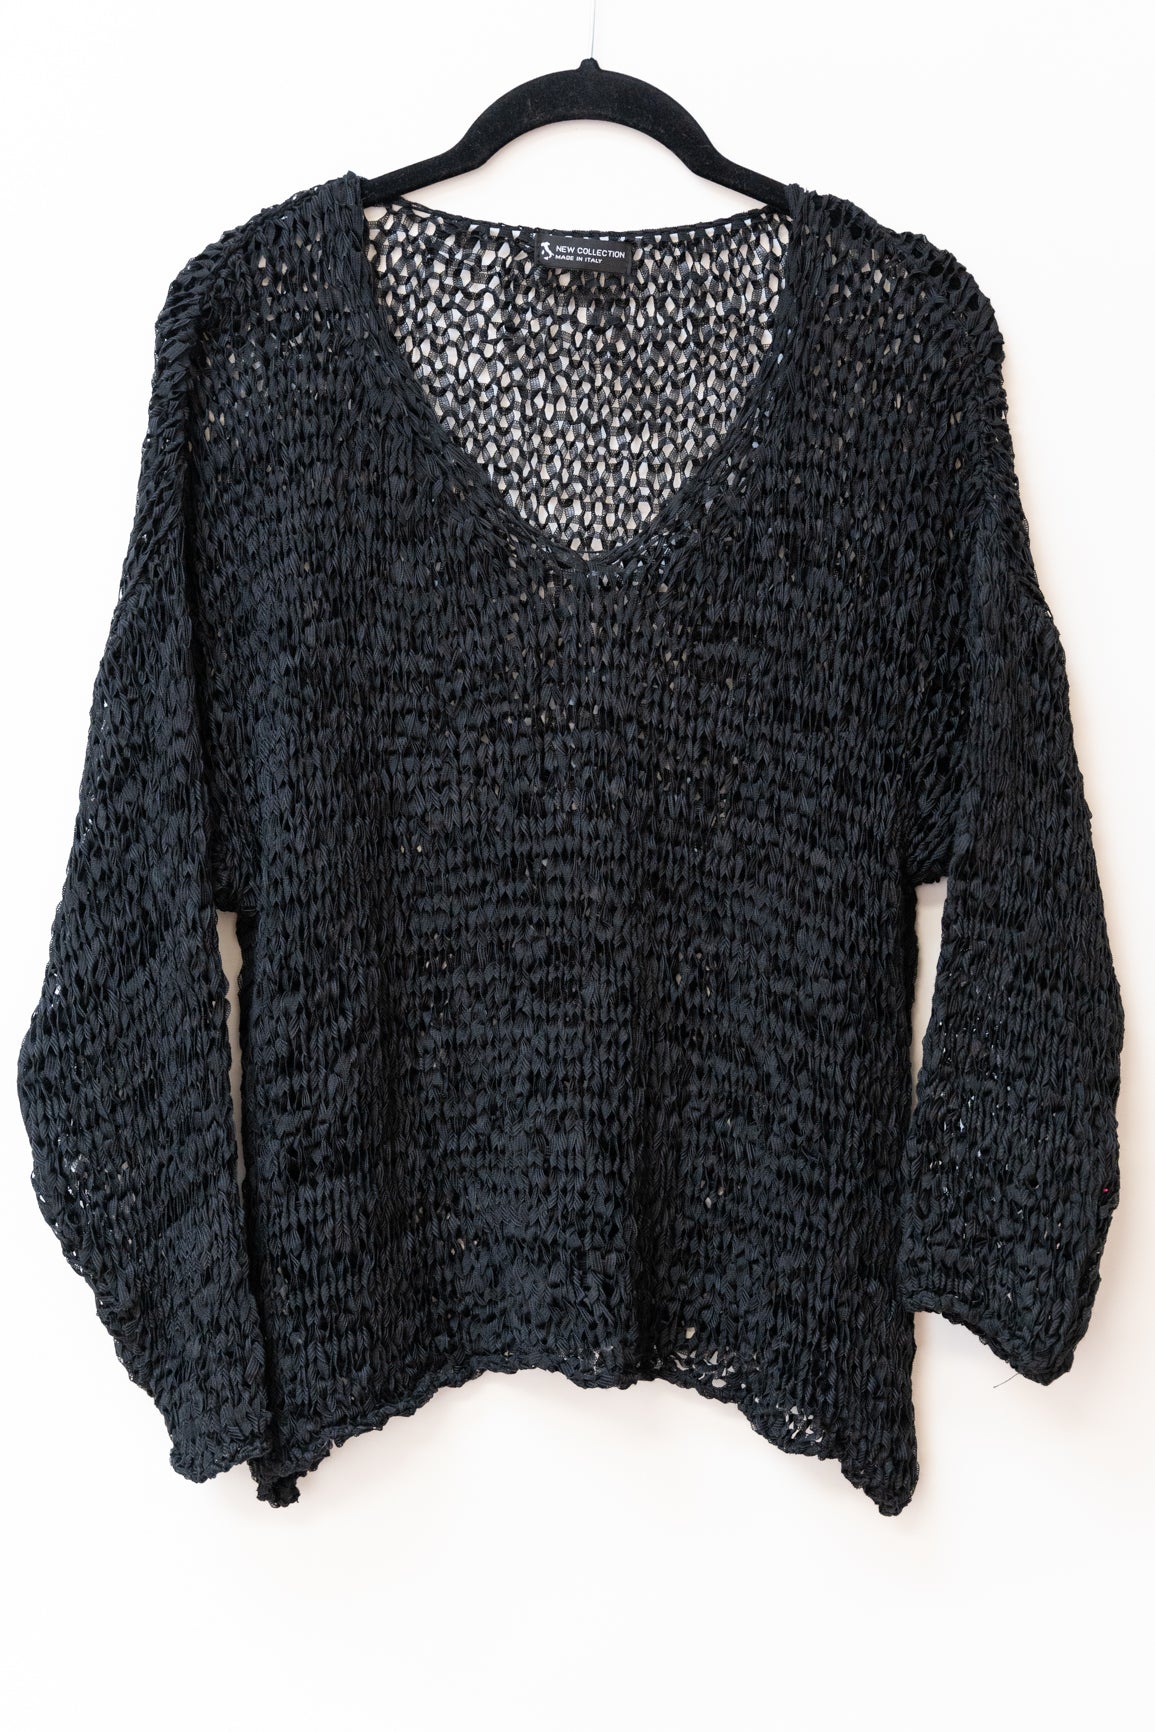 Solid crossover knit sweater - Paris Paris